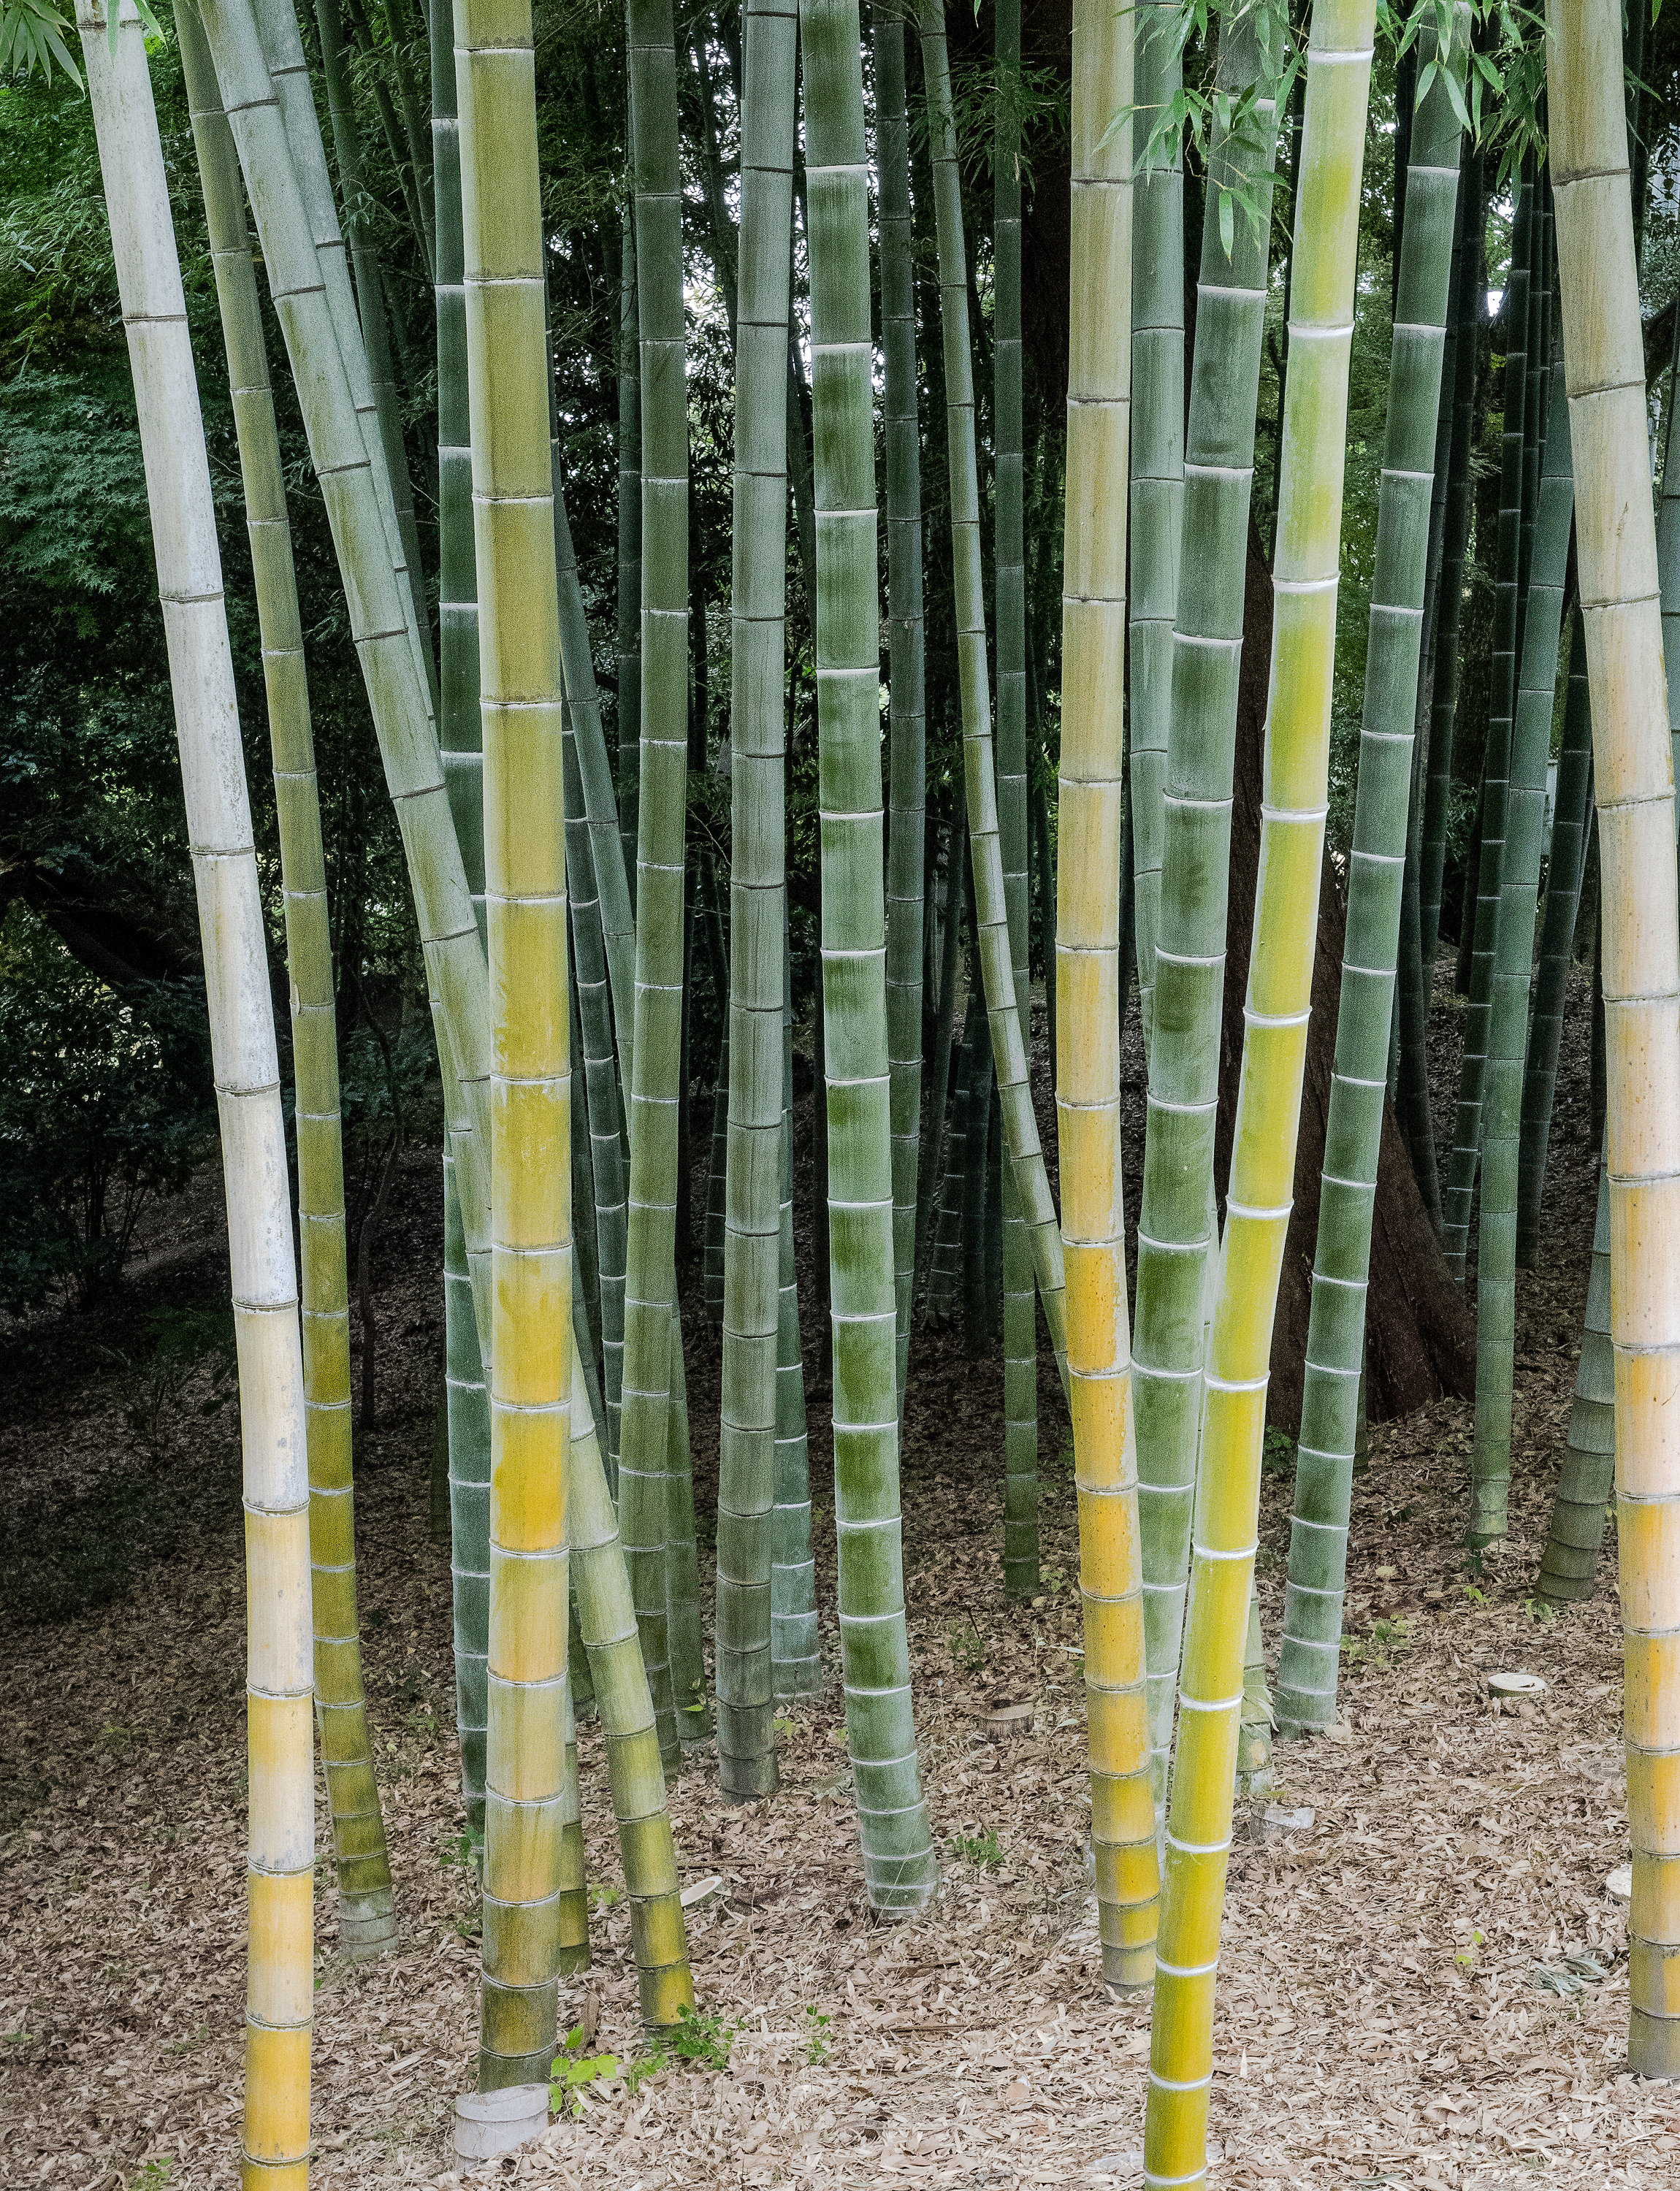 Bamboo grove, Korakuen Garden, Okayama, Japan (2014)